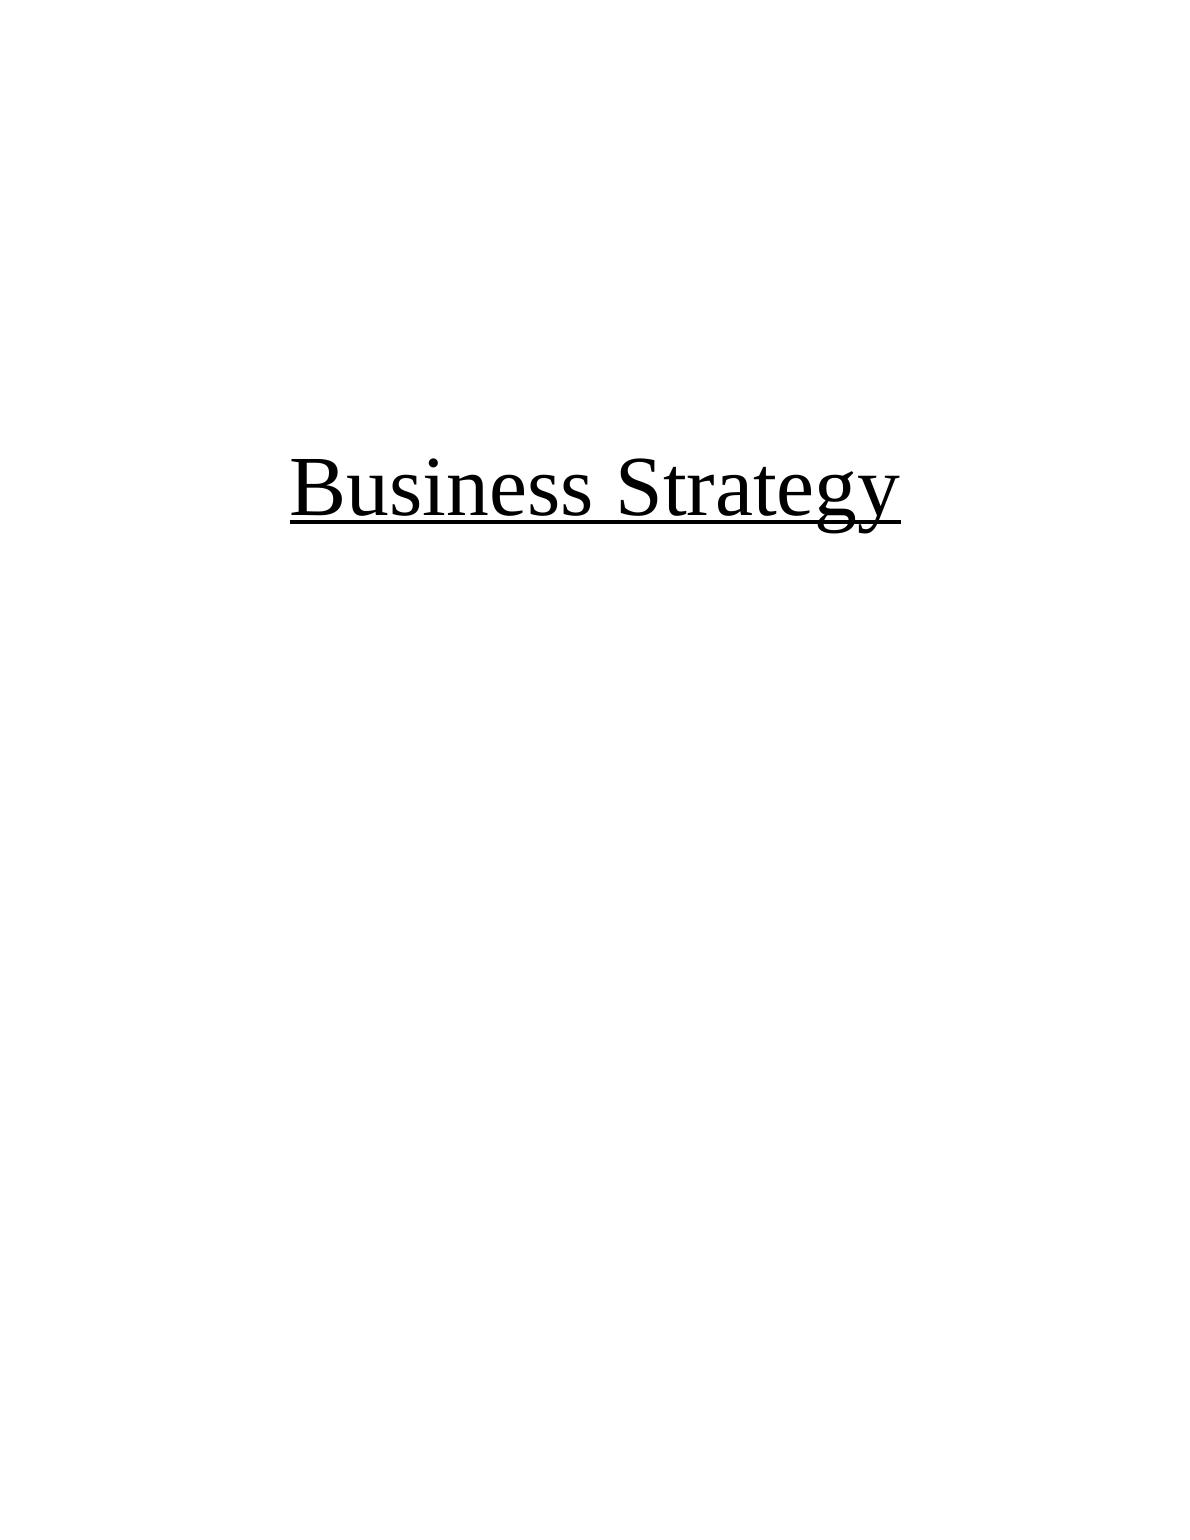 Business Strategy Report - Aldi_1